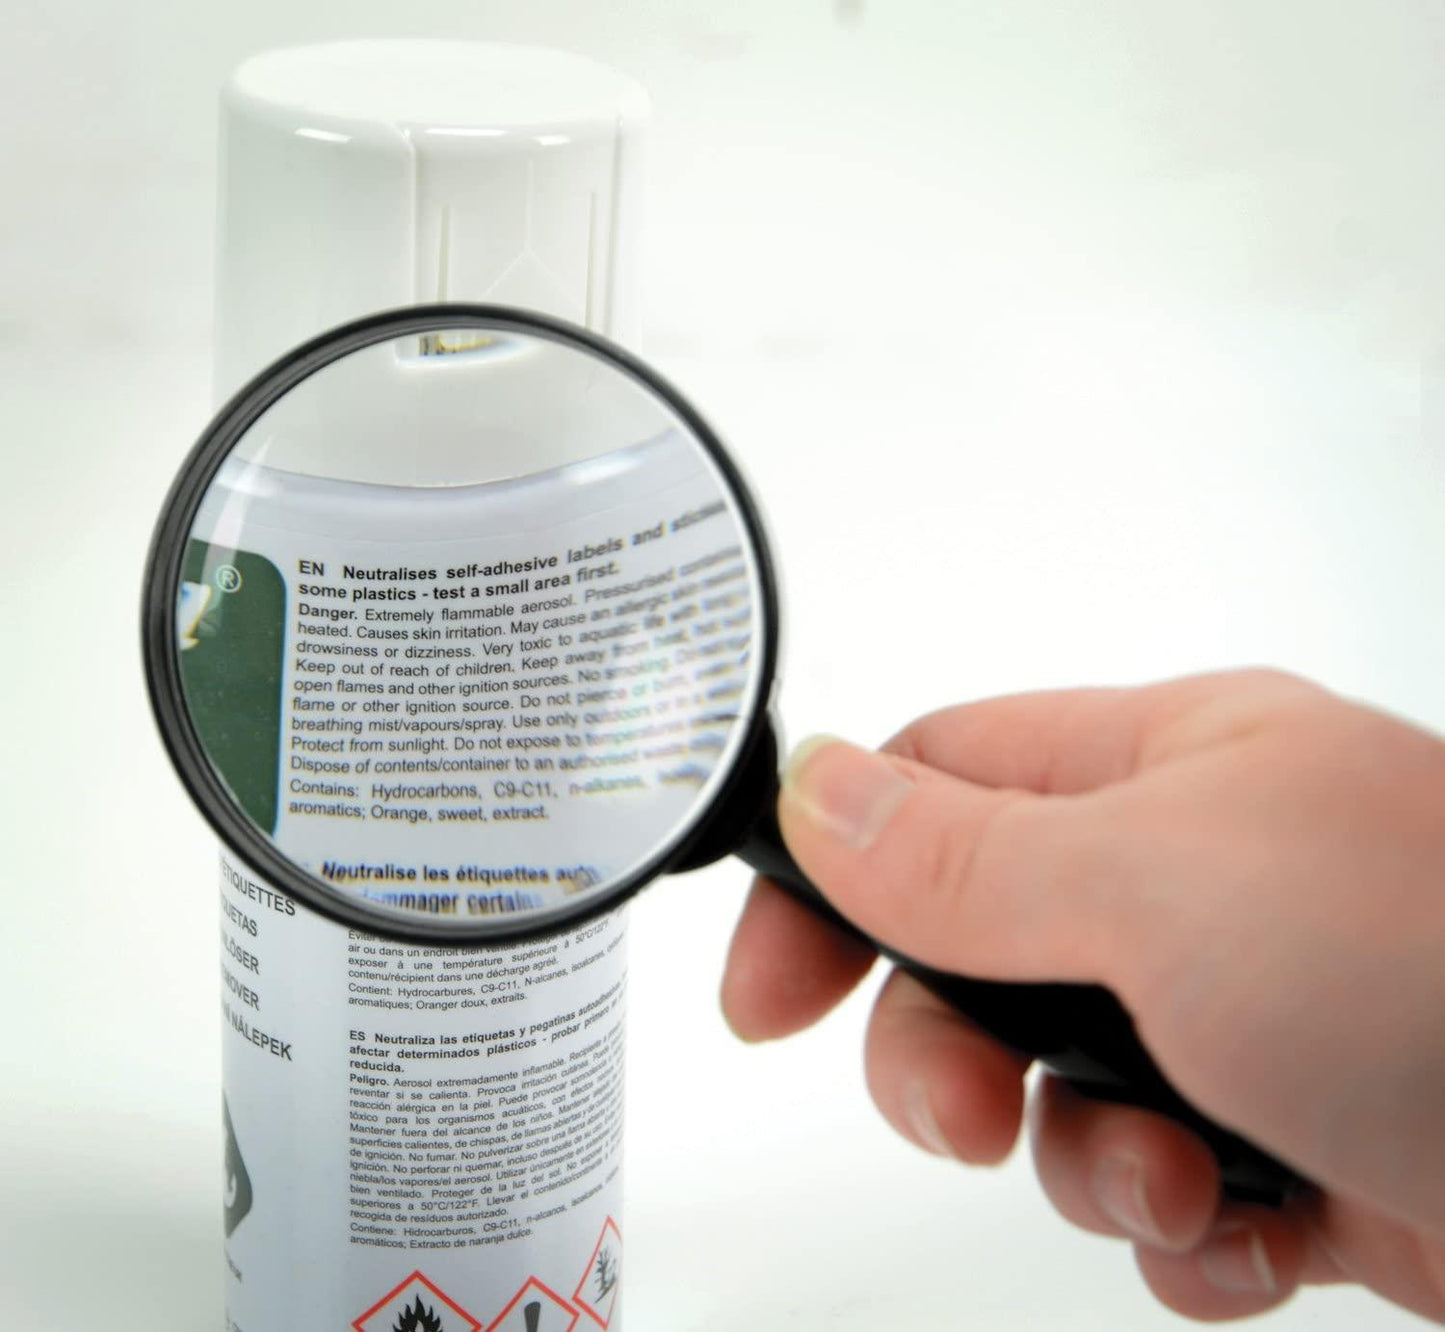 Mercury Handheld Magnifying Glass 6x Magnification- Black